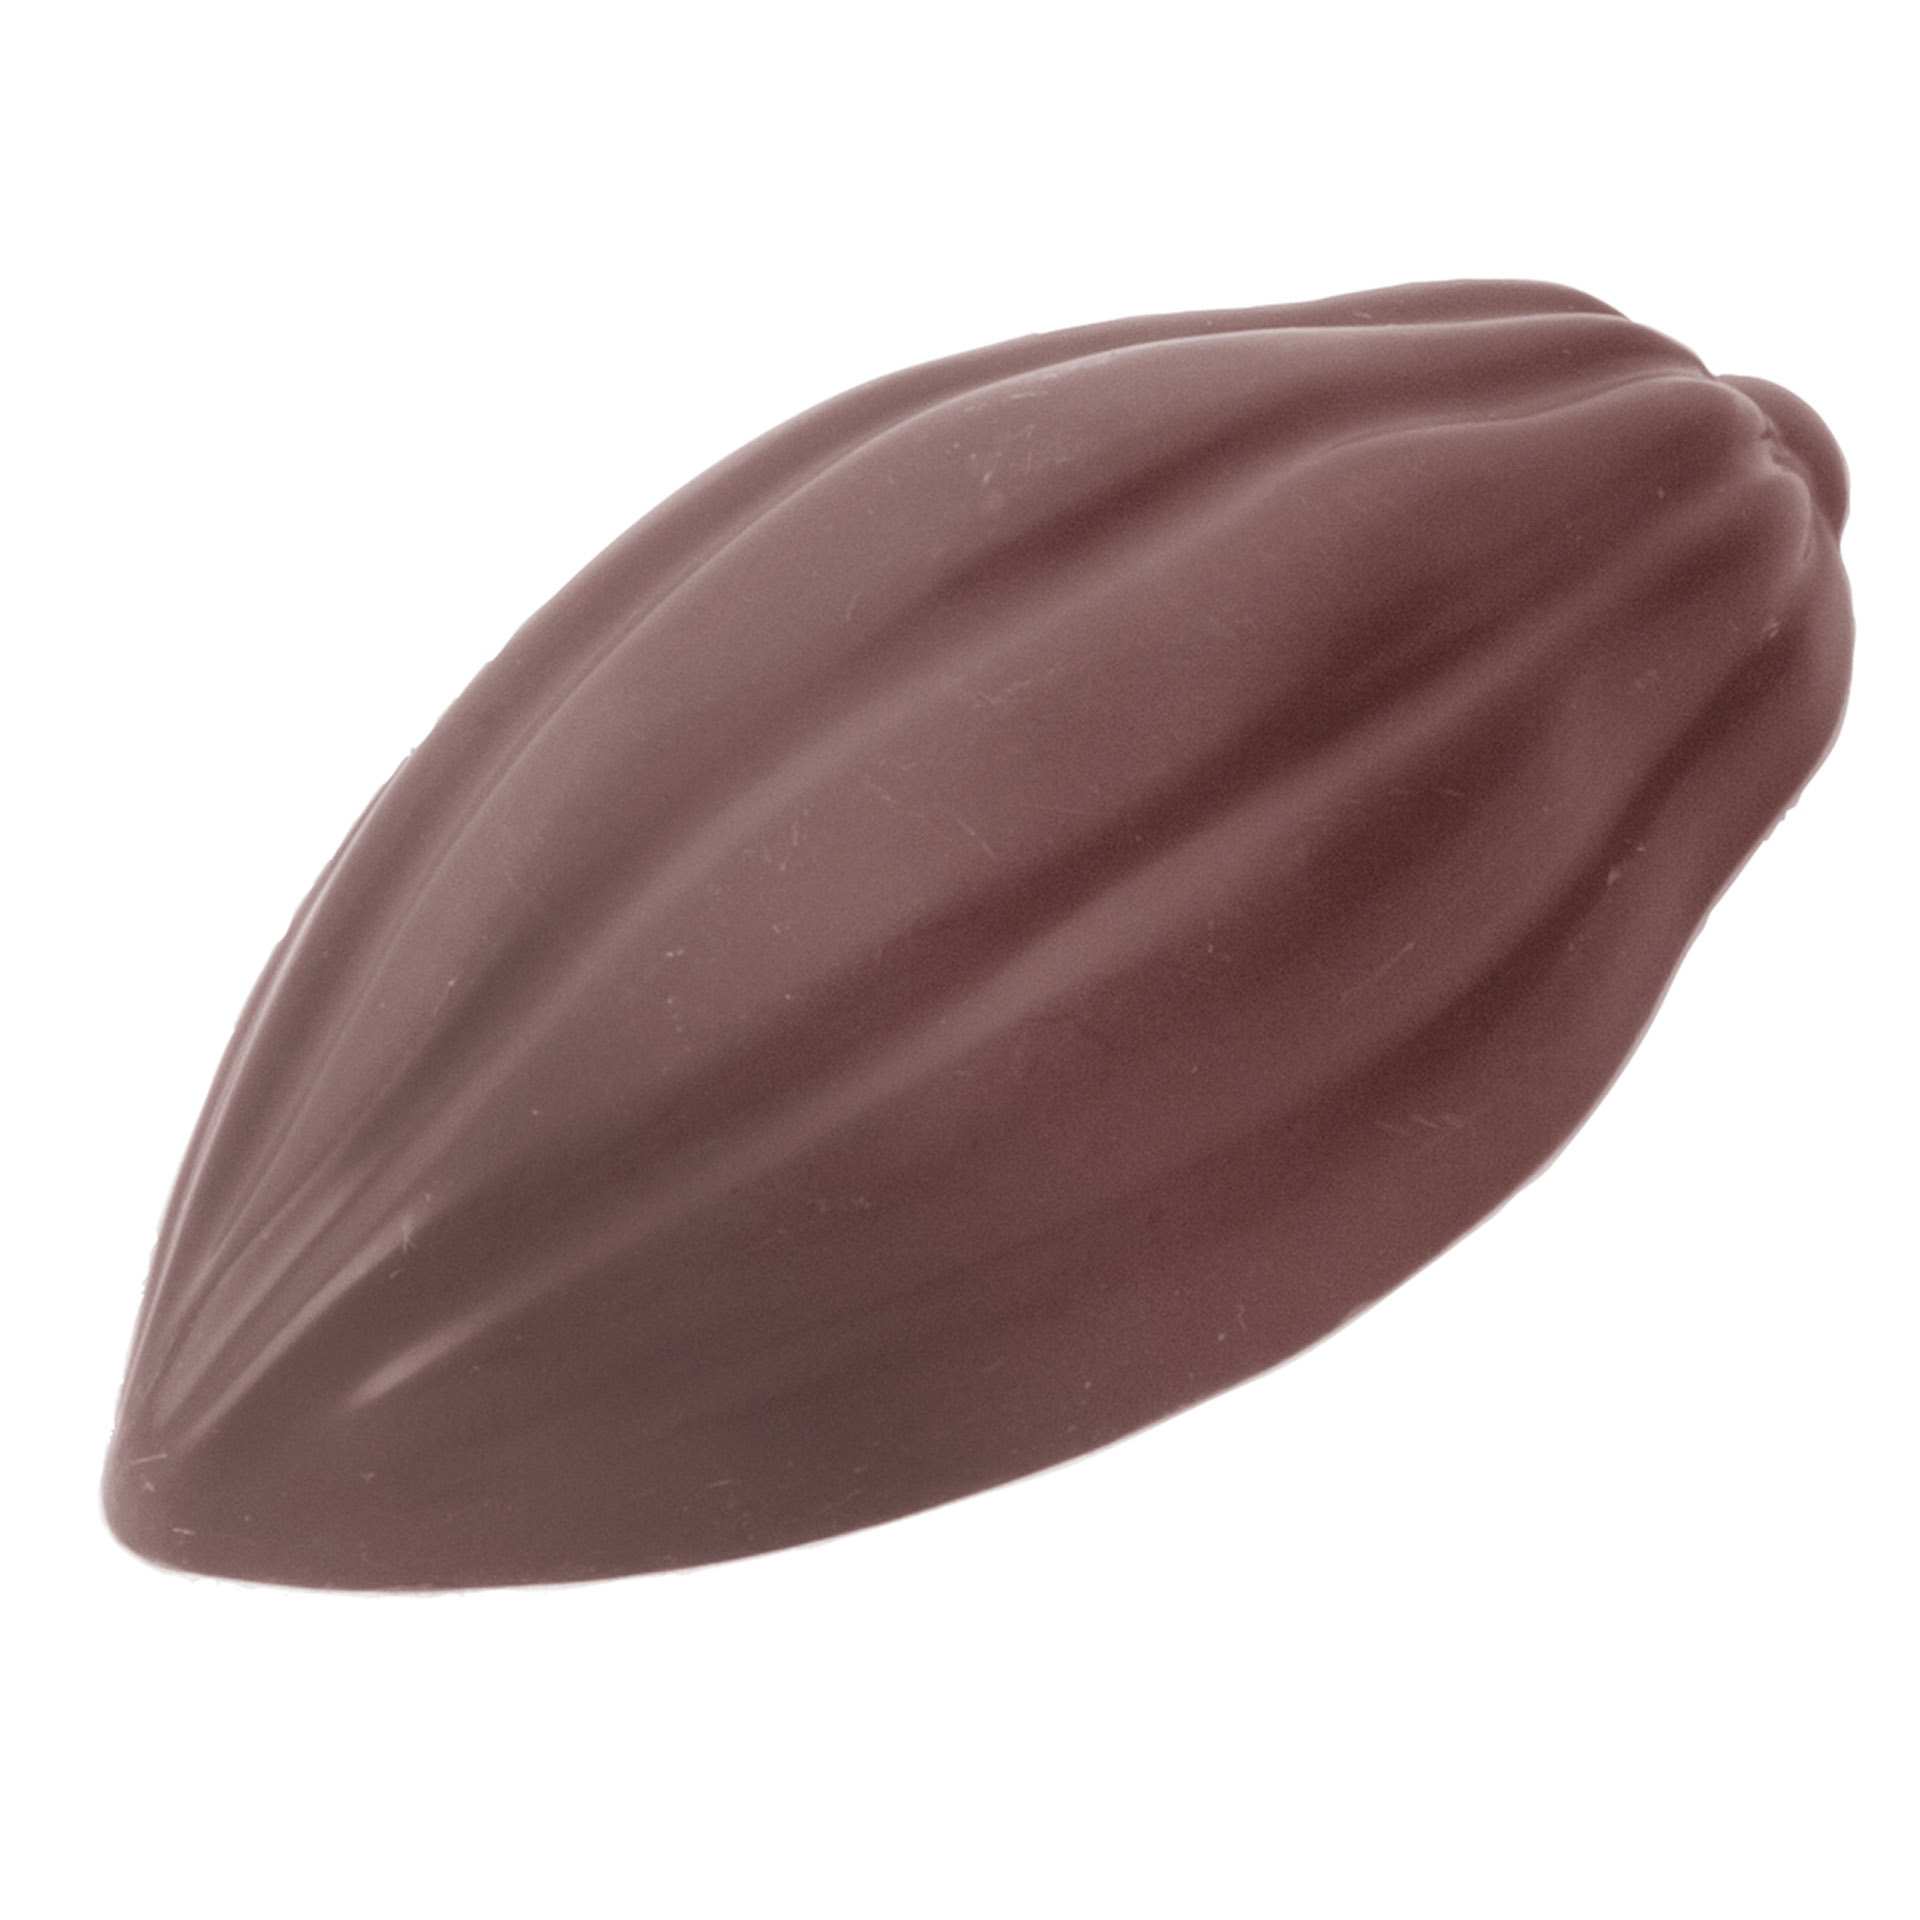 Schokoladen-Form - Kakaobohne - Abm. 27,5 x 17,5 x 2,6 cm - Polycarbonat - 422370-C